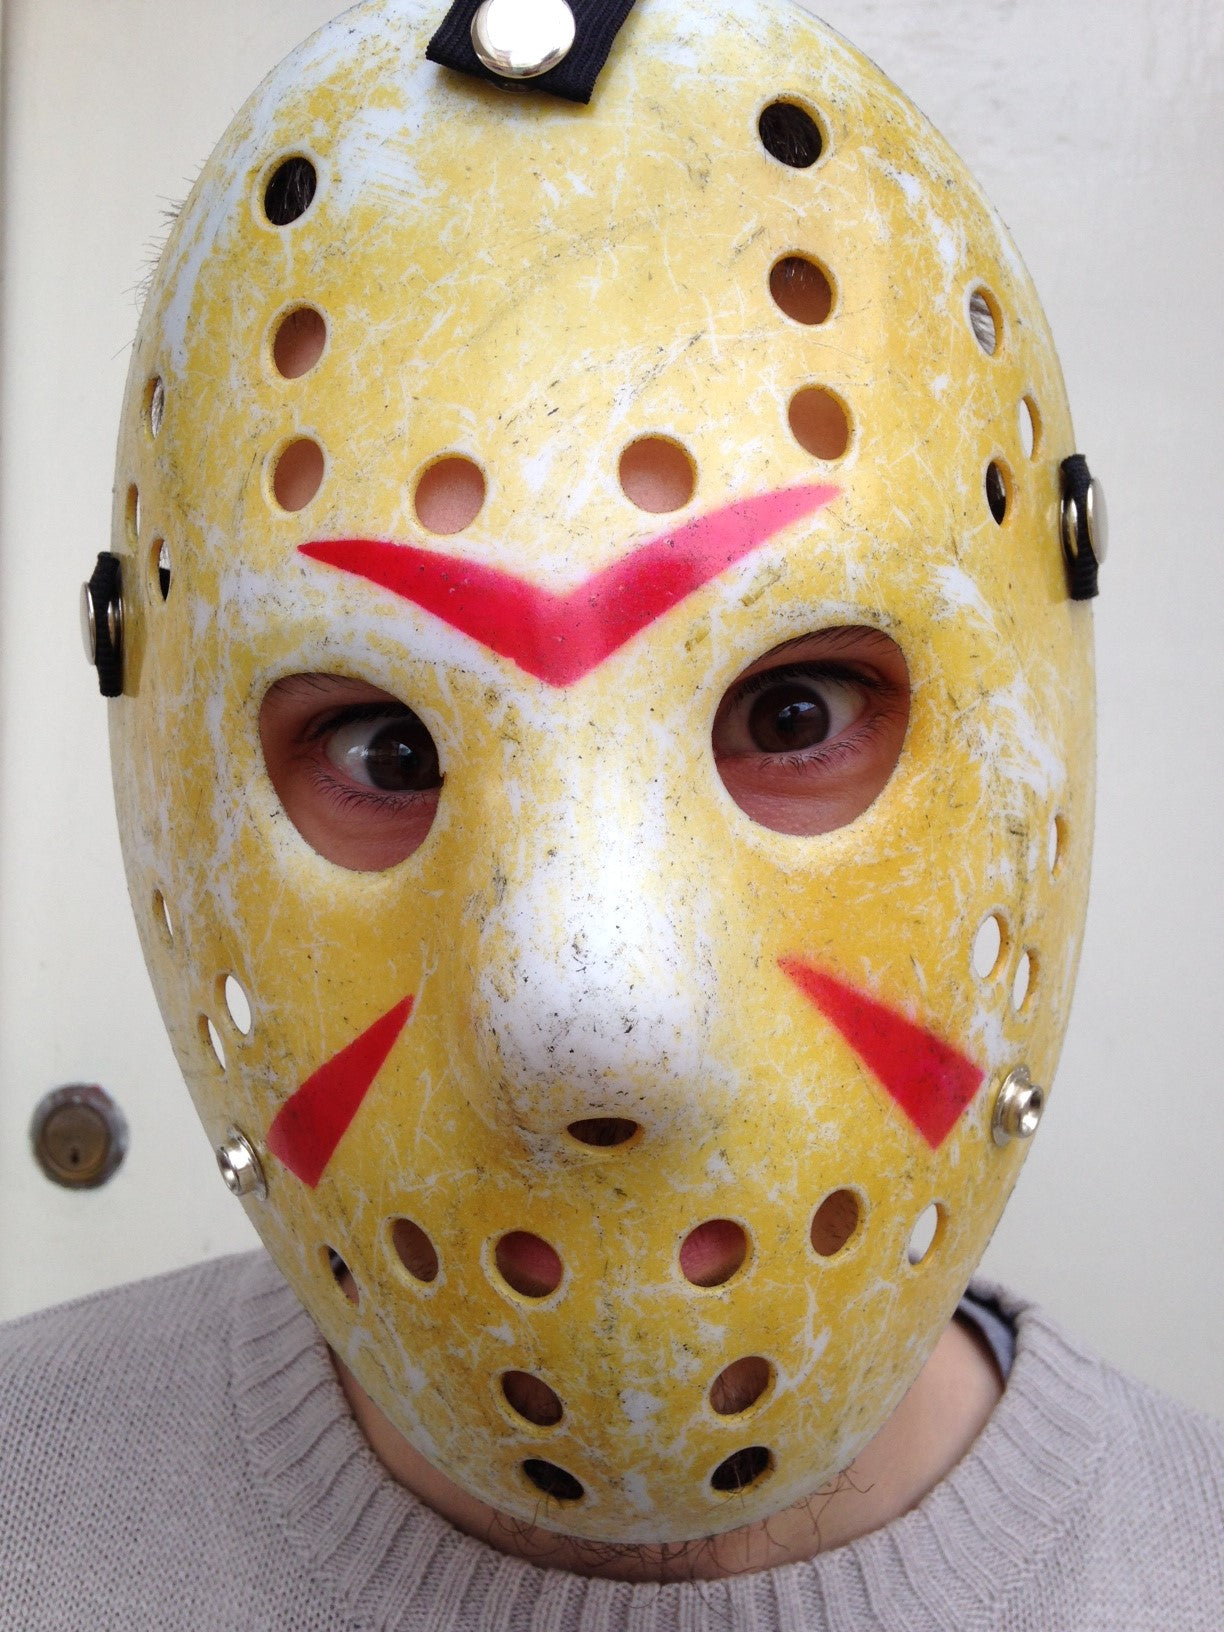 Friday 13th Hockey Horror Mask - Jason Voorhees Style